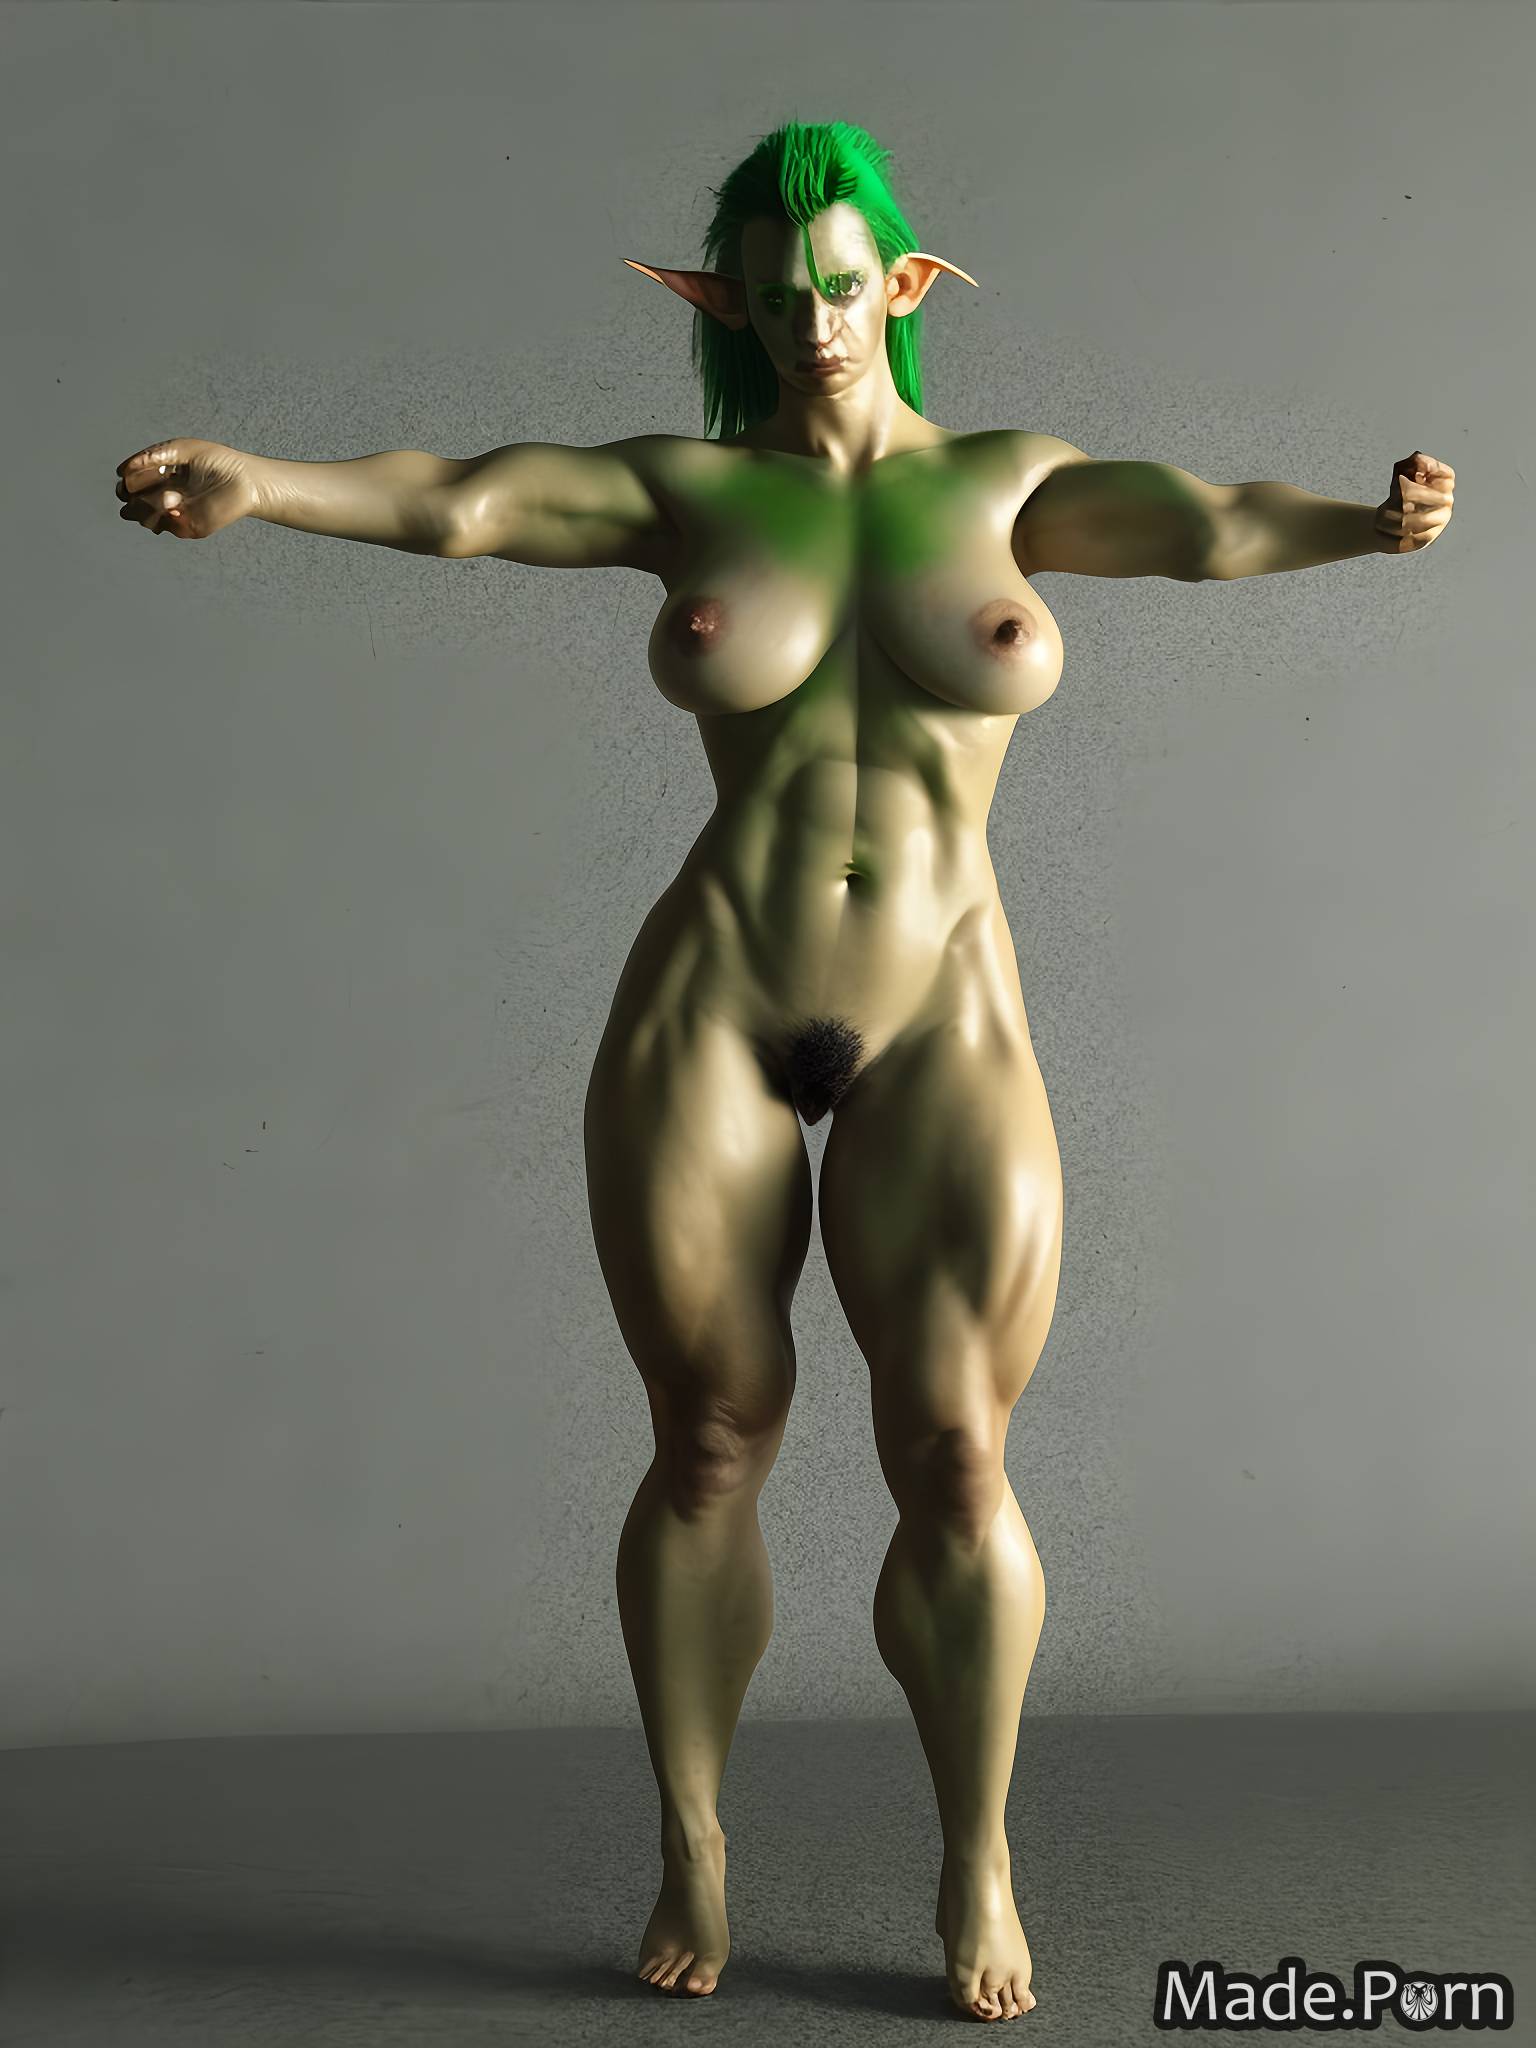 3d Green Porn - Porn image of goblin 50 3d green hair muscular big hips woman created by AI